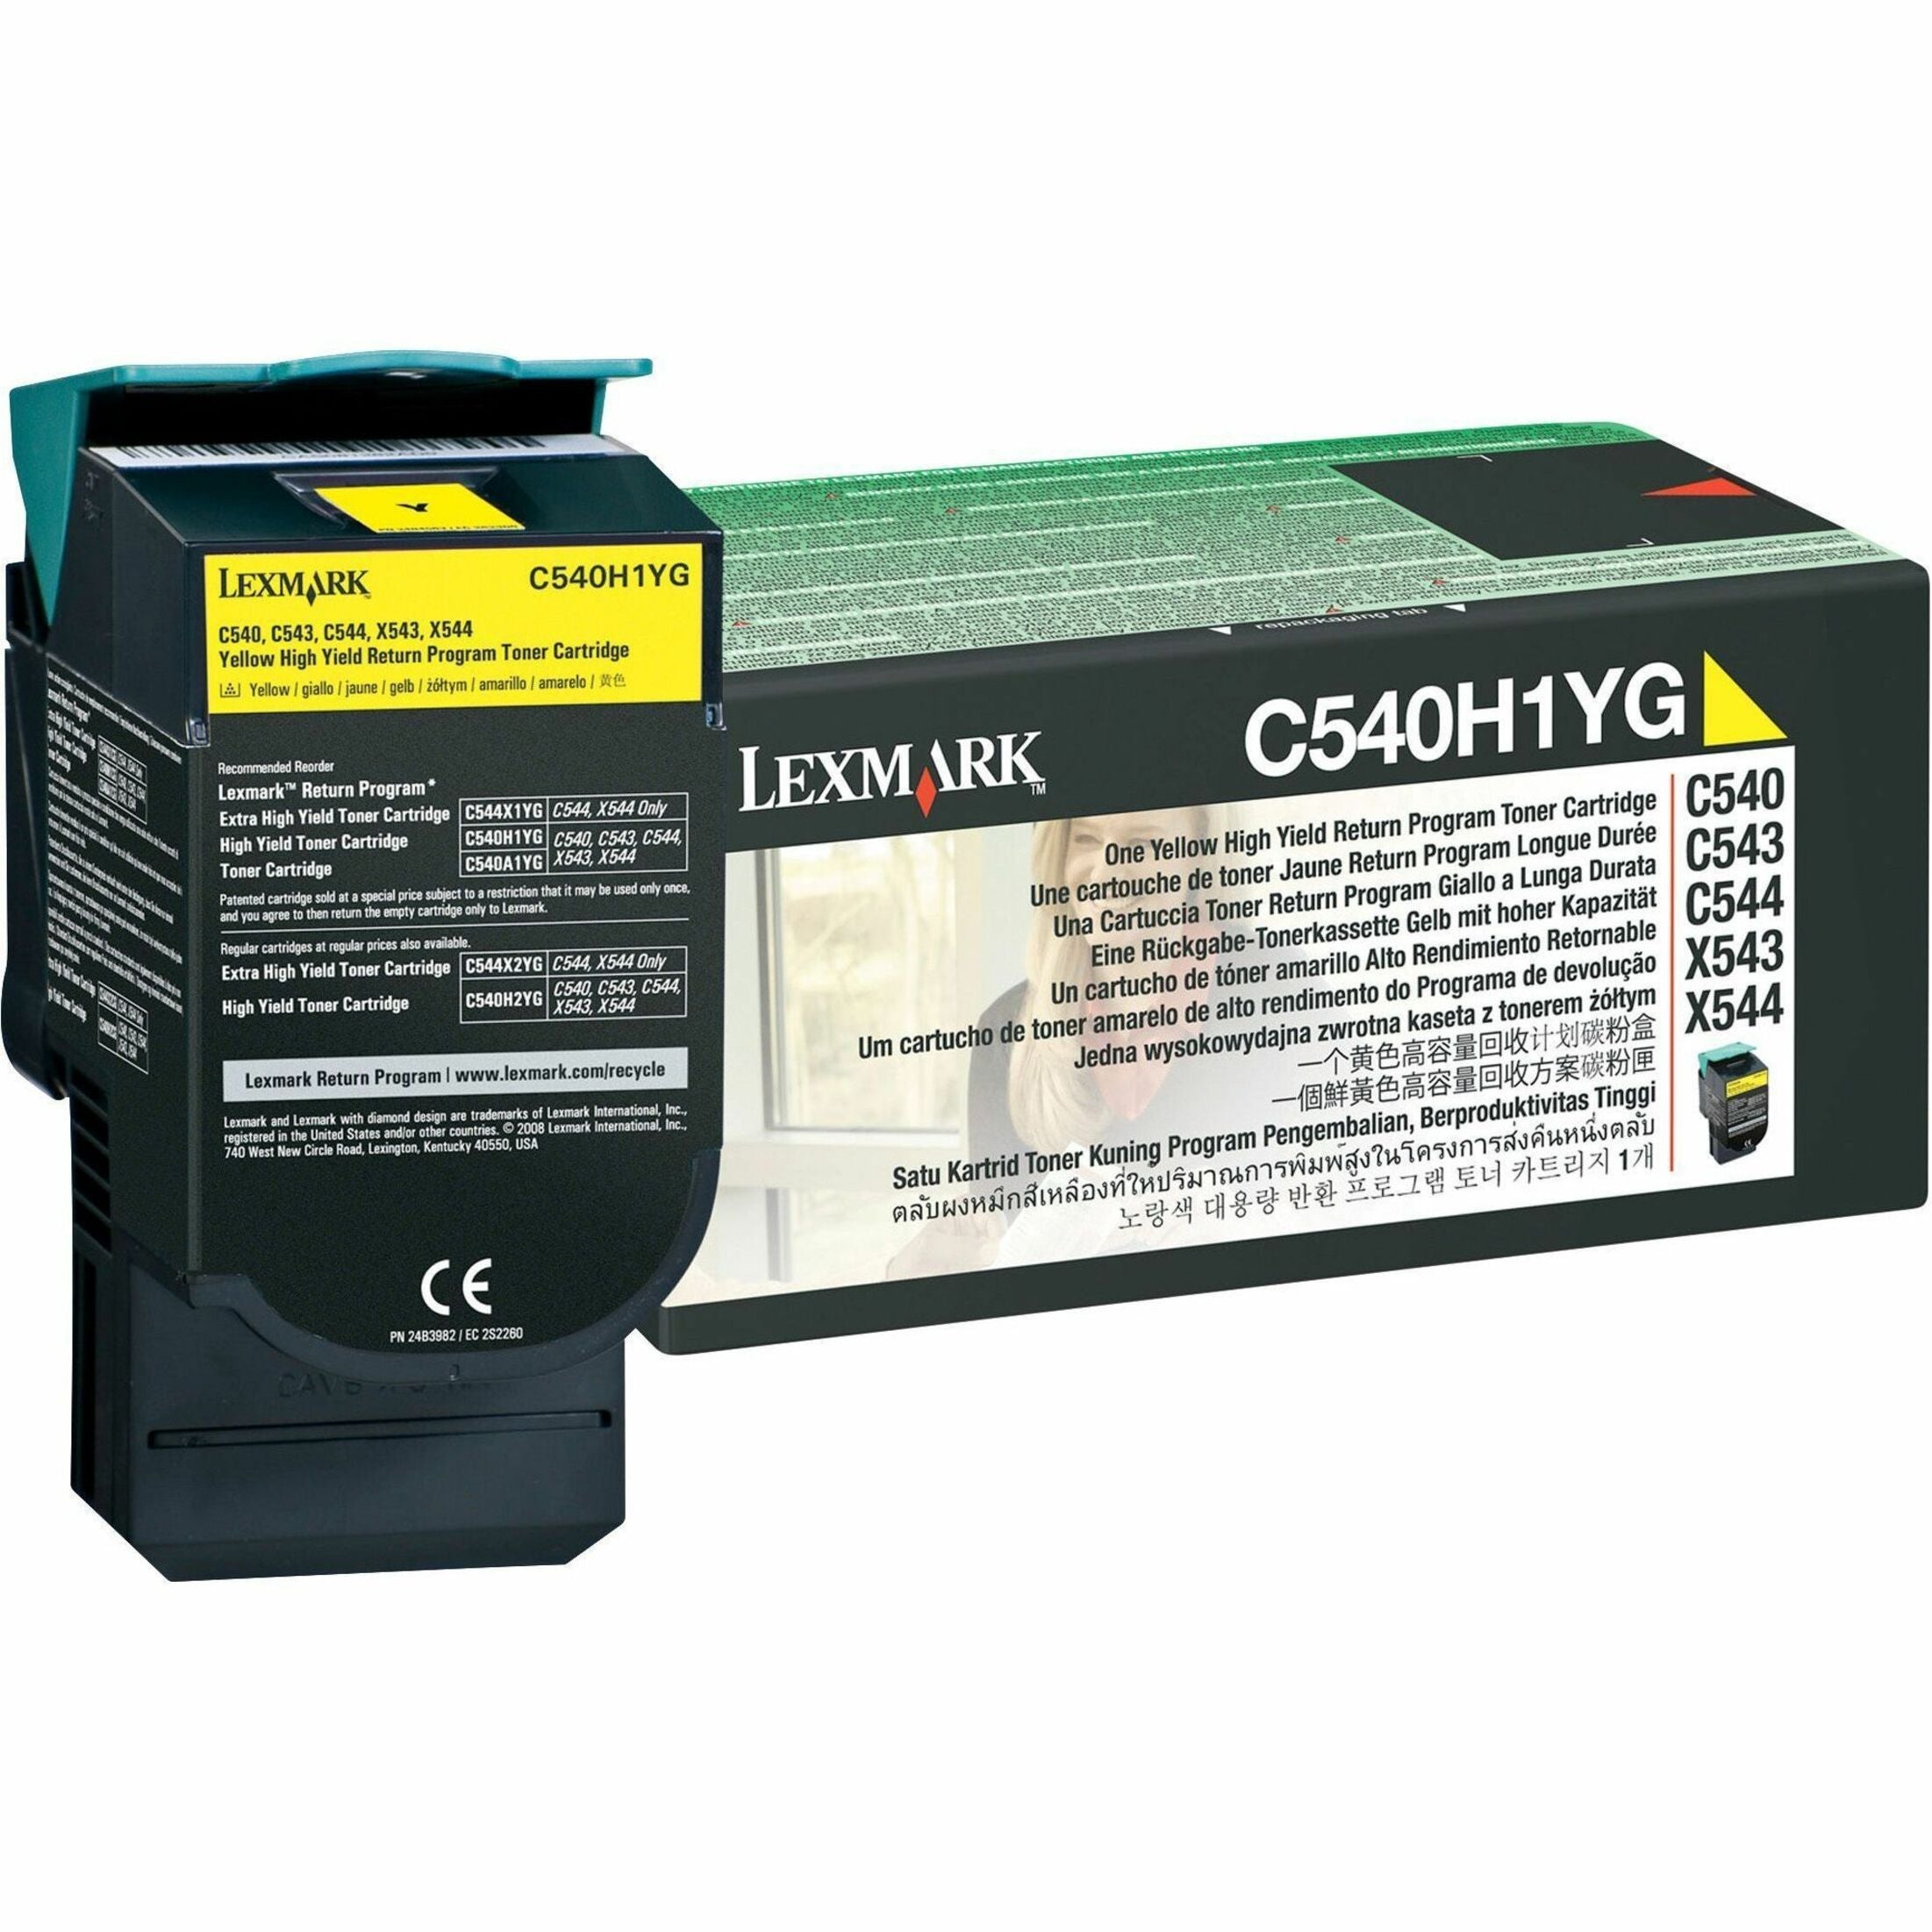 Lexmark C540H1YG Print Cartridge, Yellow, 2000 Page Yield